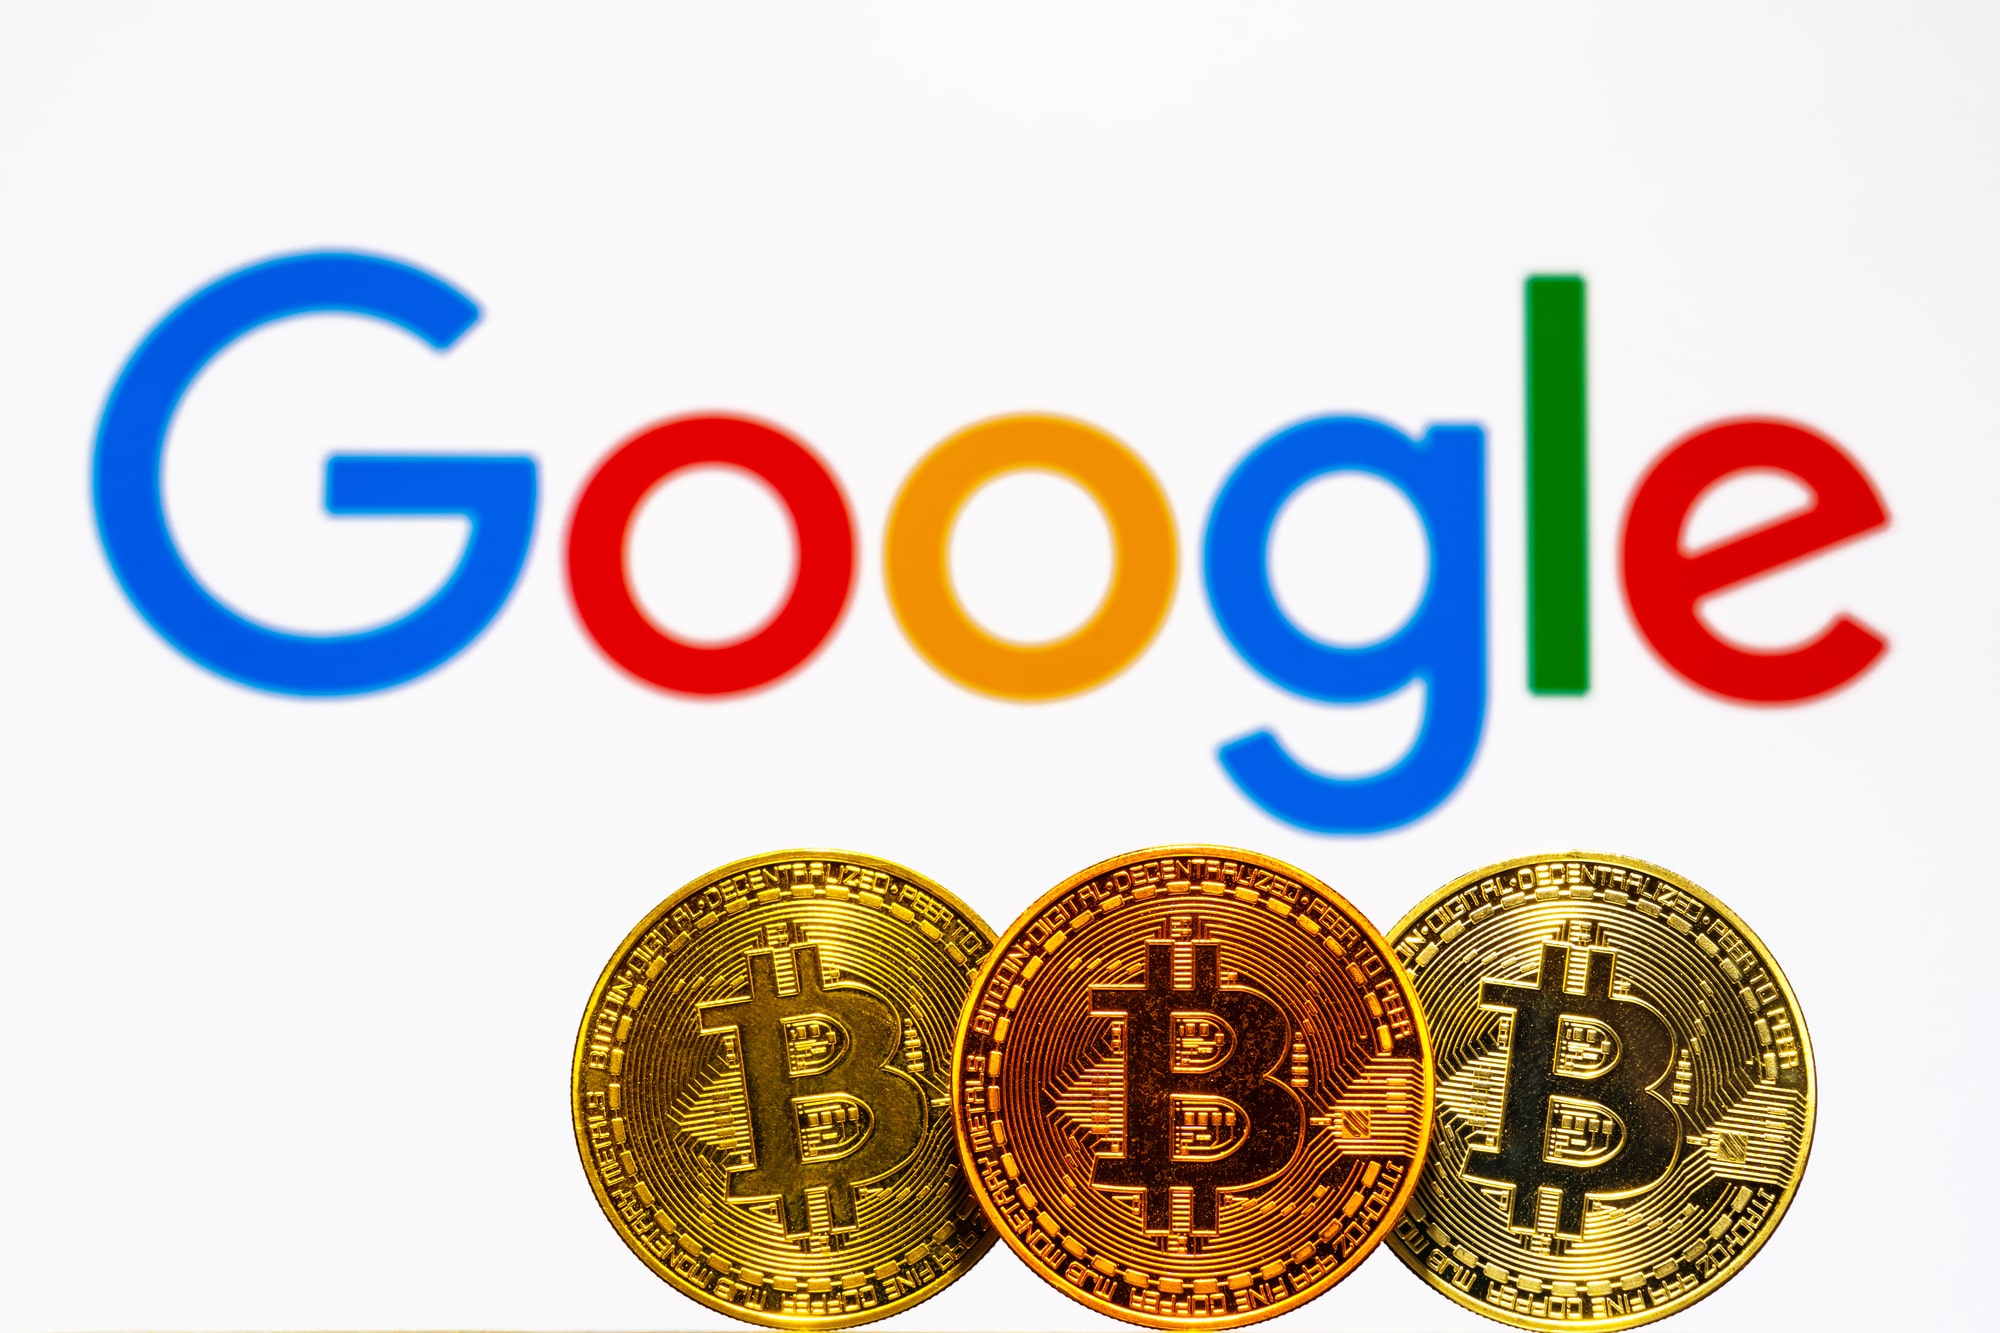 Bakkt crypto exchange integrates with Google Pay